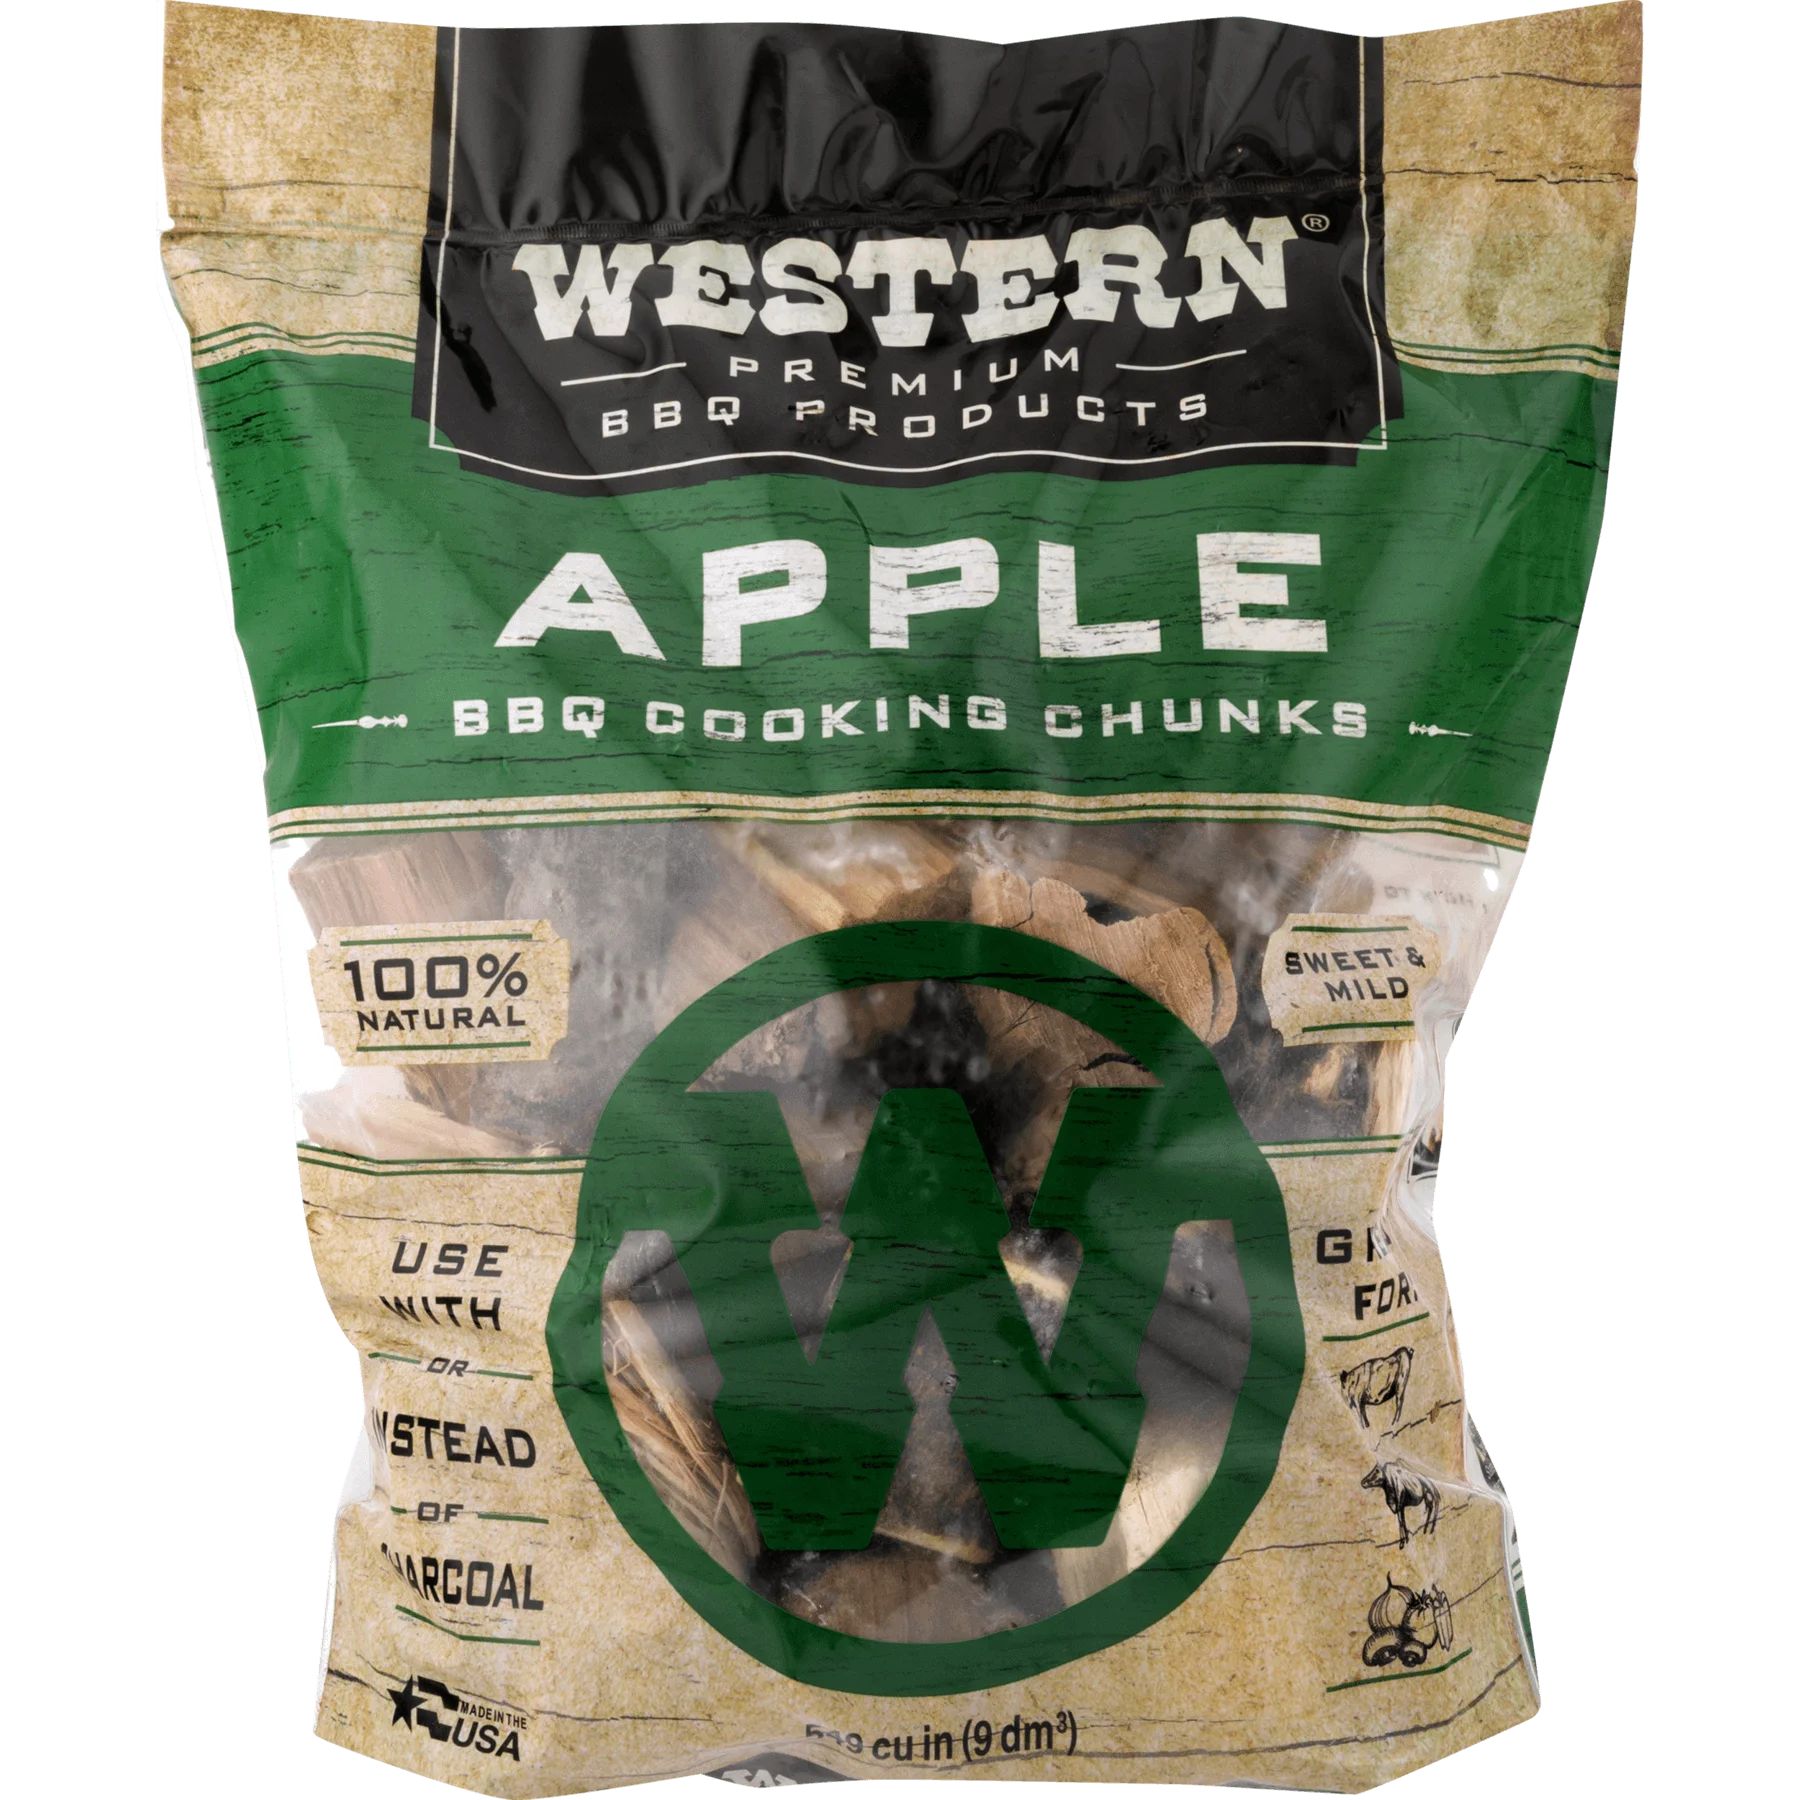 Western Premium BBQ Products Apple BBQ Cooking Chunks, 549 cu in | Walmart (US)